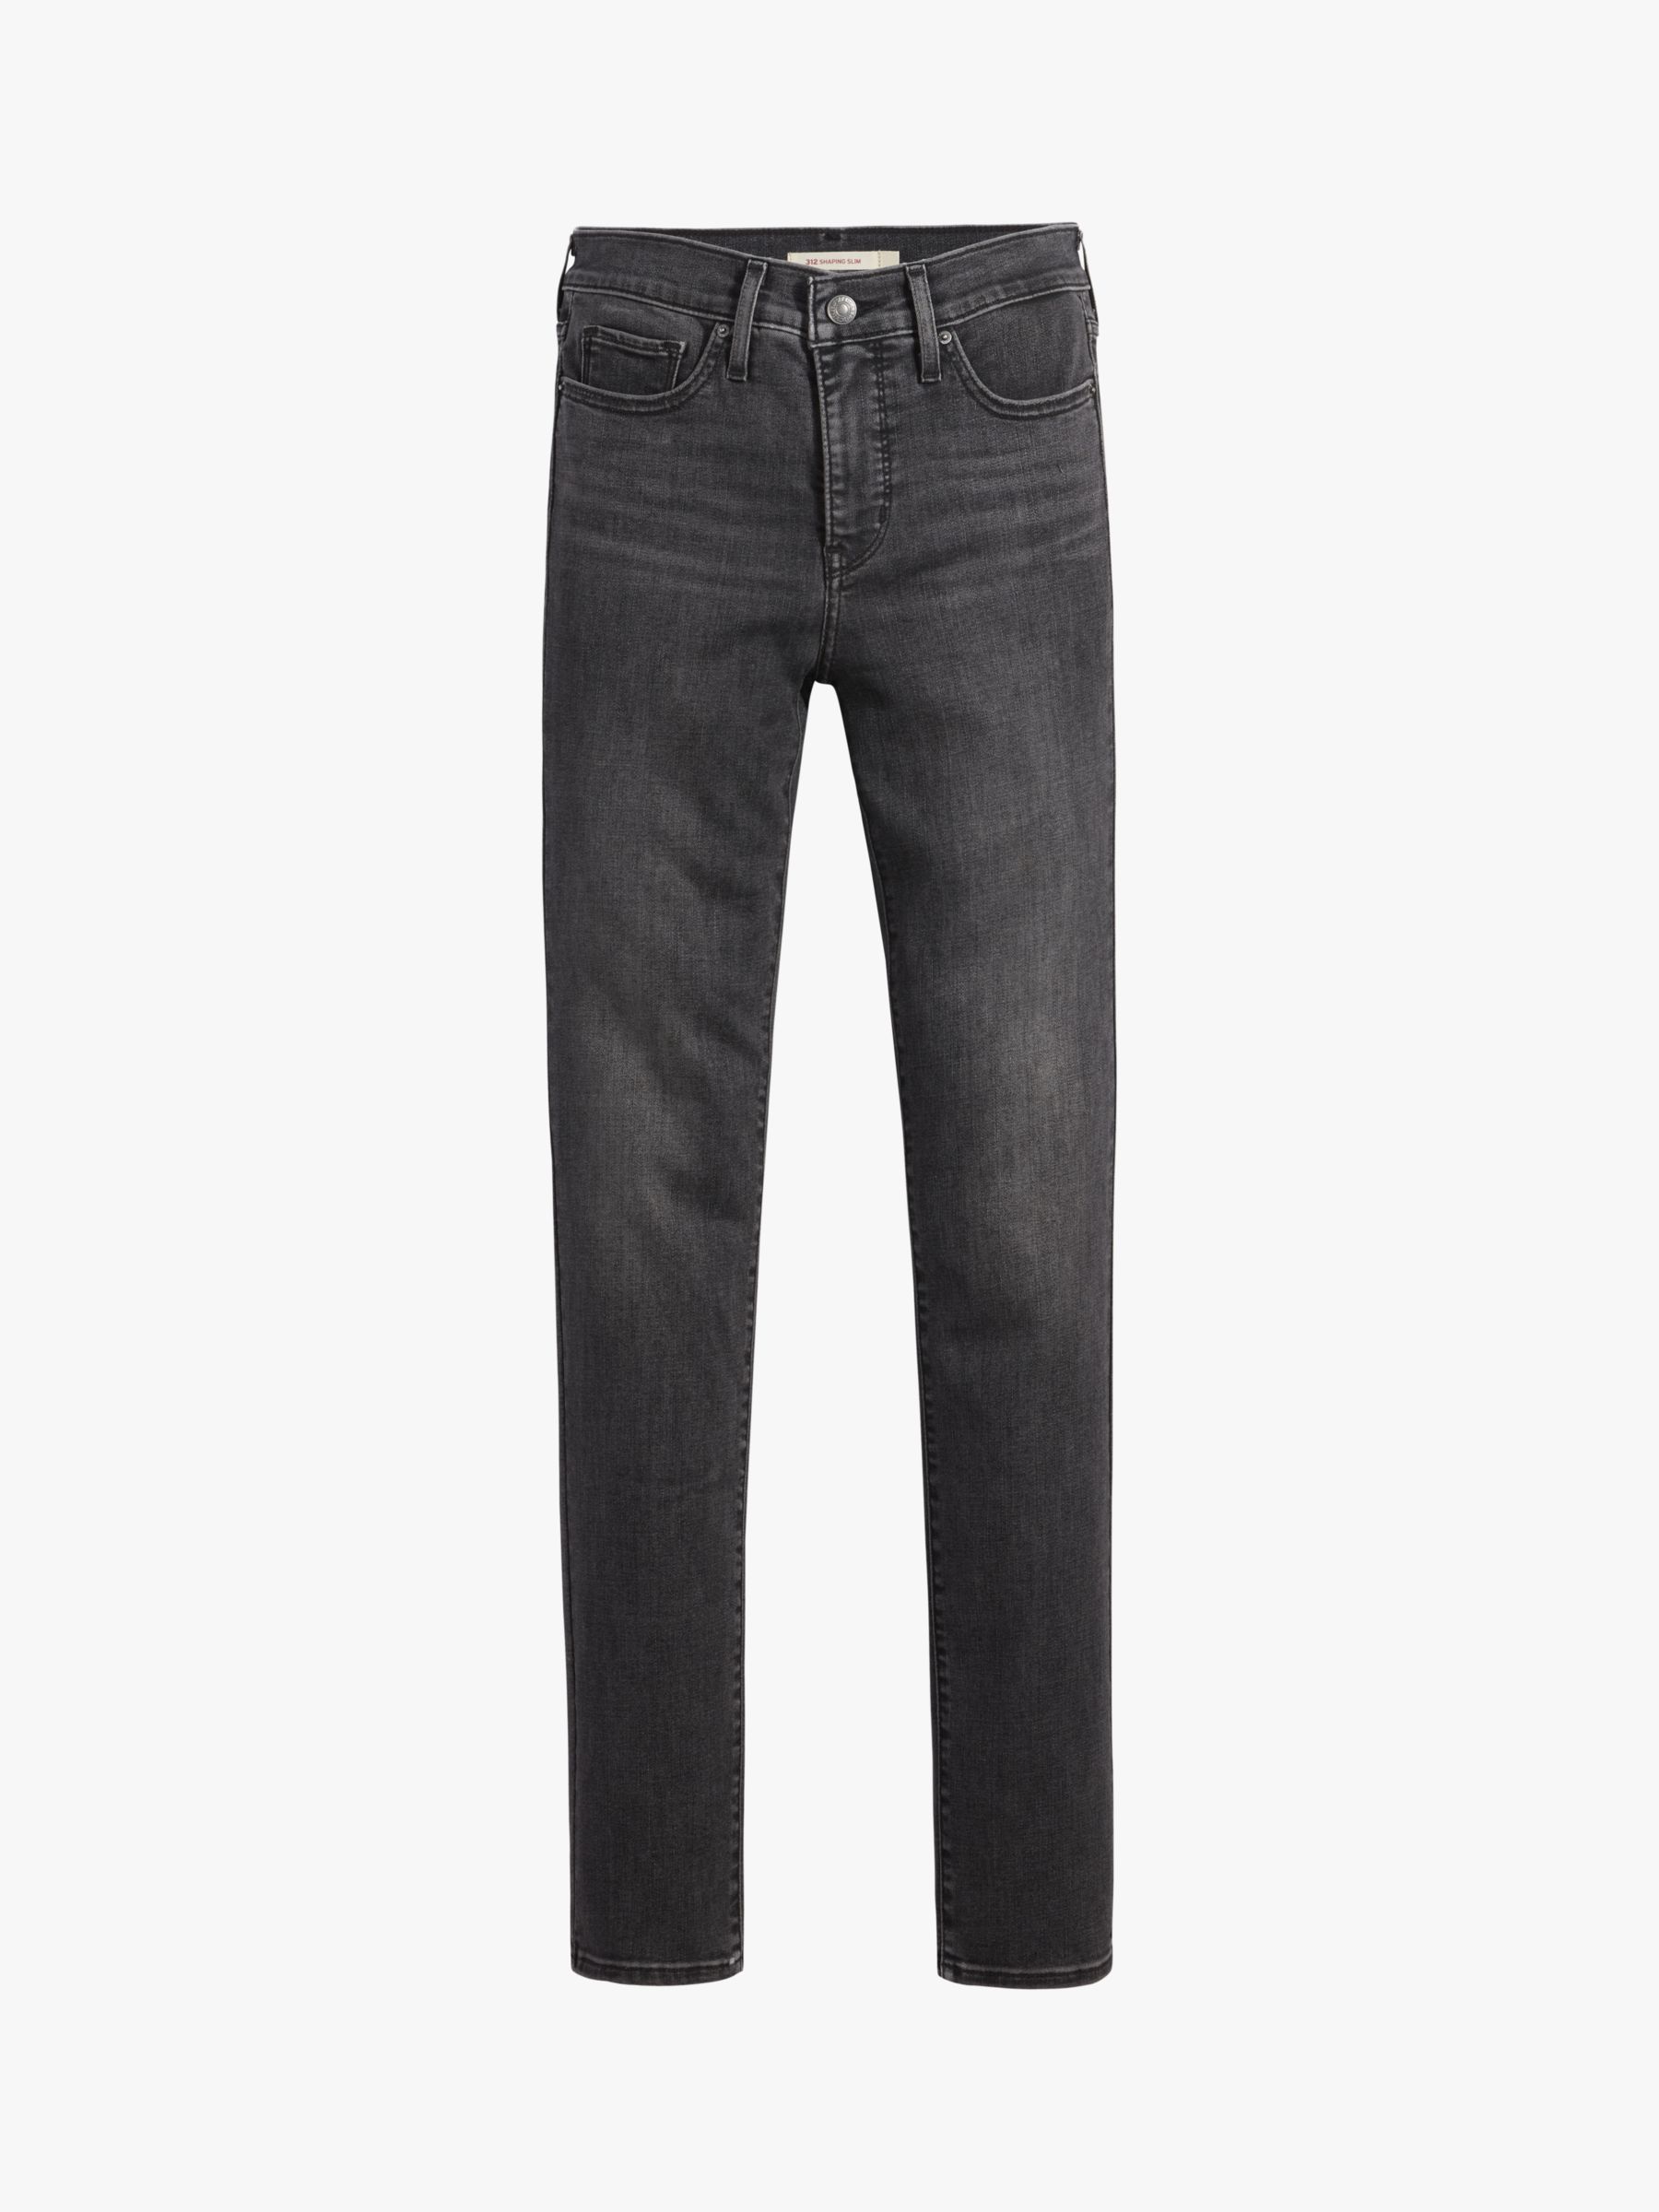 Levi's 312 Shaping Slim Jeans, Crushed Black, W26/L30